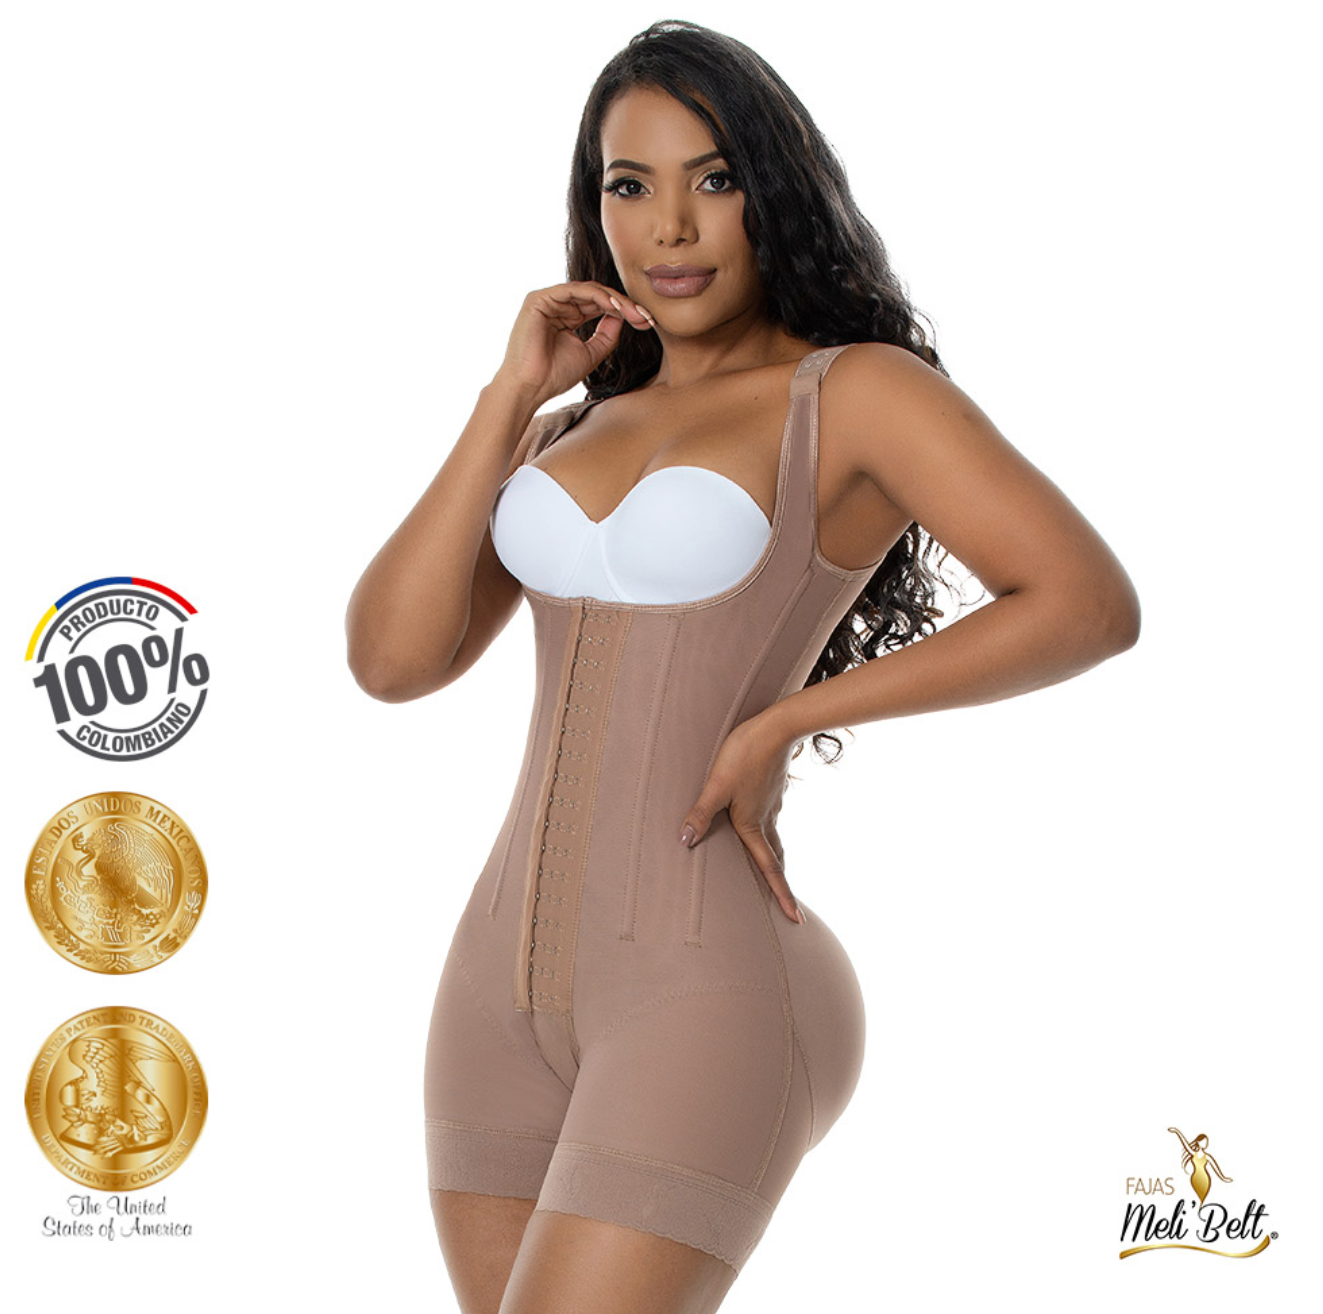 Meli'Belt República Dominicana - Luce autentica con nuestros Leggings.  REF.7105 #EligerSerUnica #EligeSerMeliBelt www.fajasmelibelt.com #melibelt  #melibeltRD #fajas #shapewear #bodyshaper #curvy #curvygirls #fashion